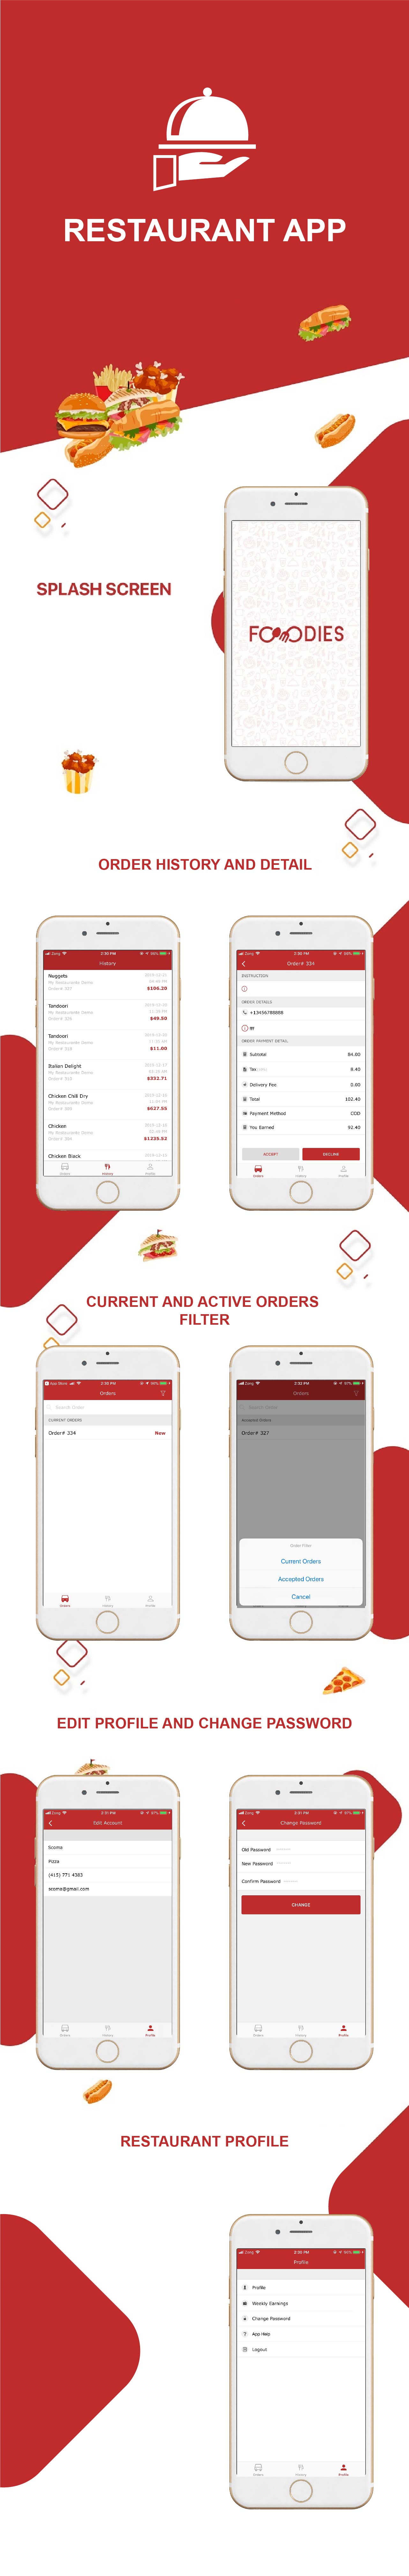 Foodies - IOS Native Order Taking Restaurant App - 2